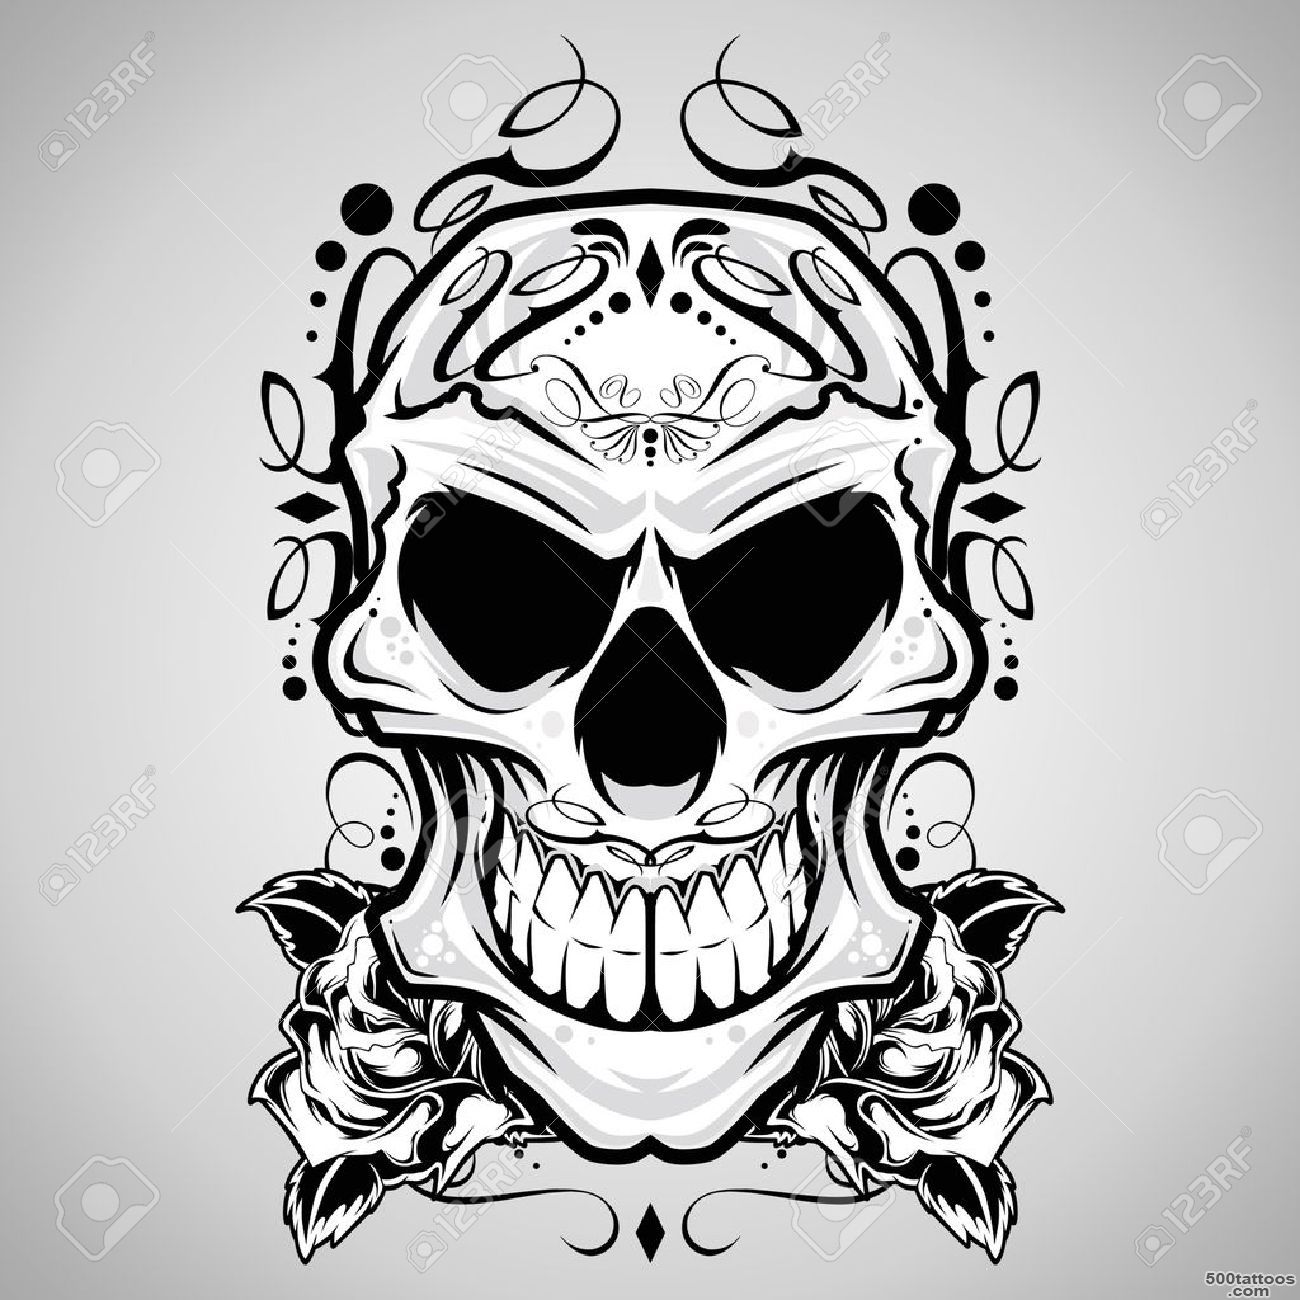 Skull Tattoo Stock Photos, Pictures, Royalty Free Skull Tattoo ..._45